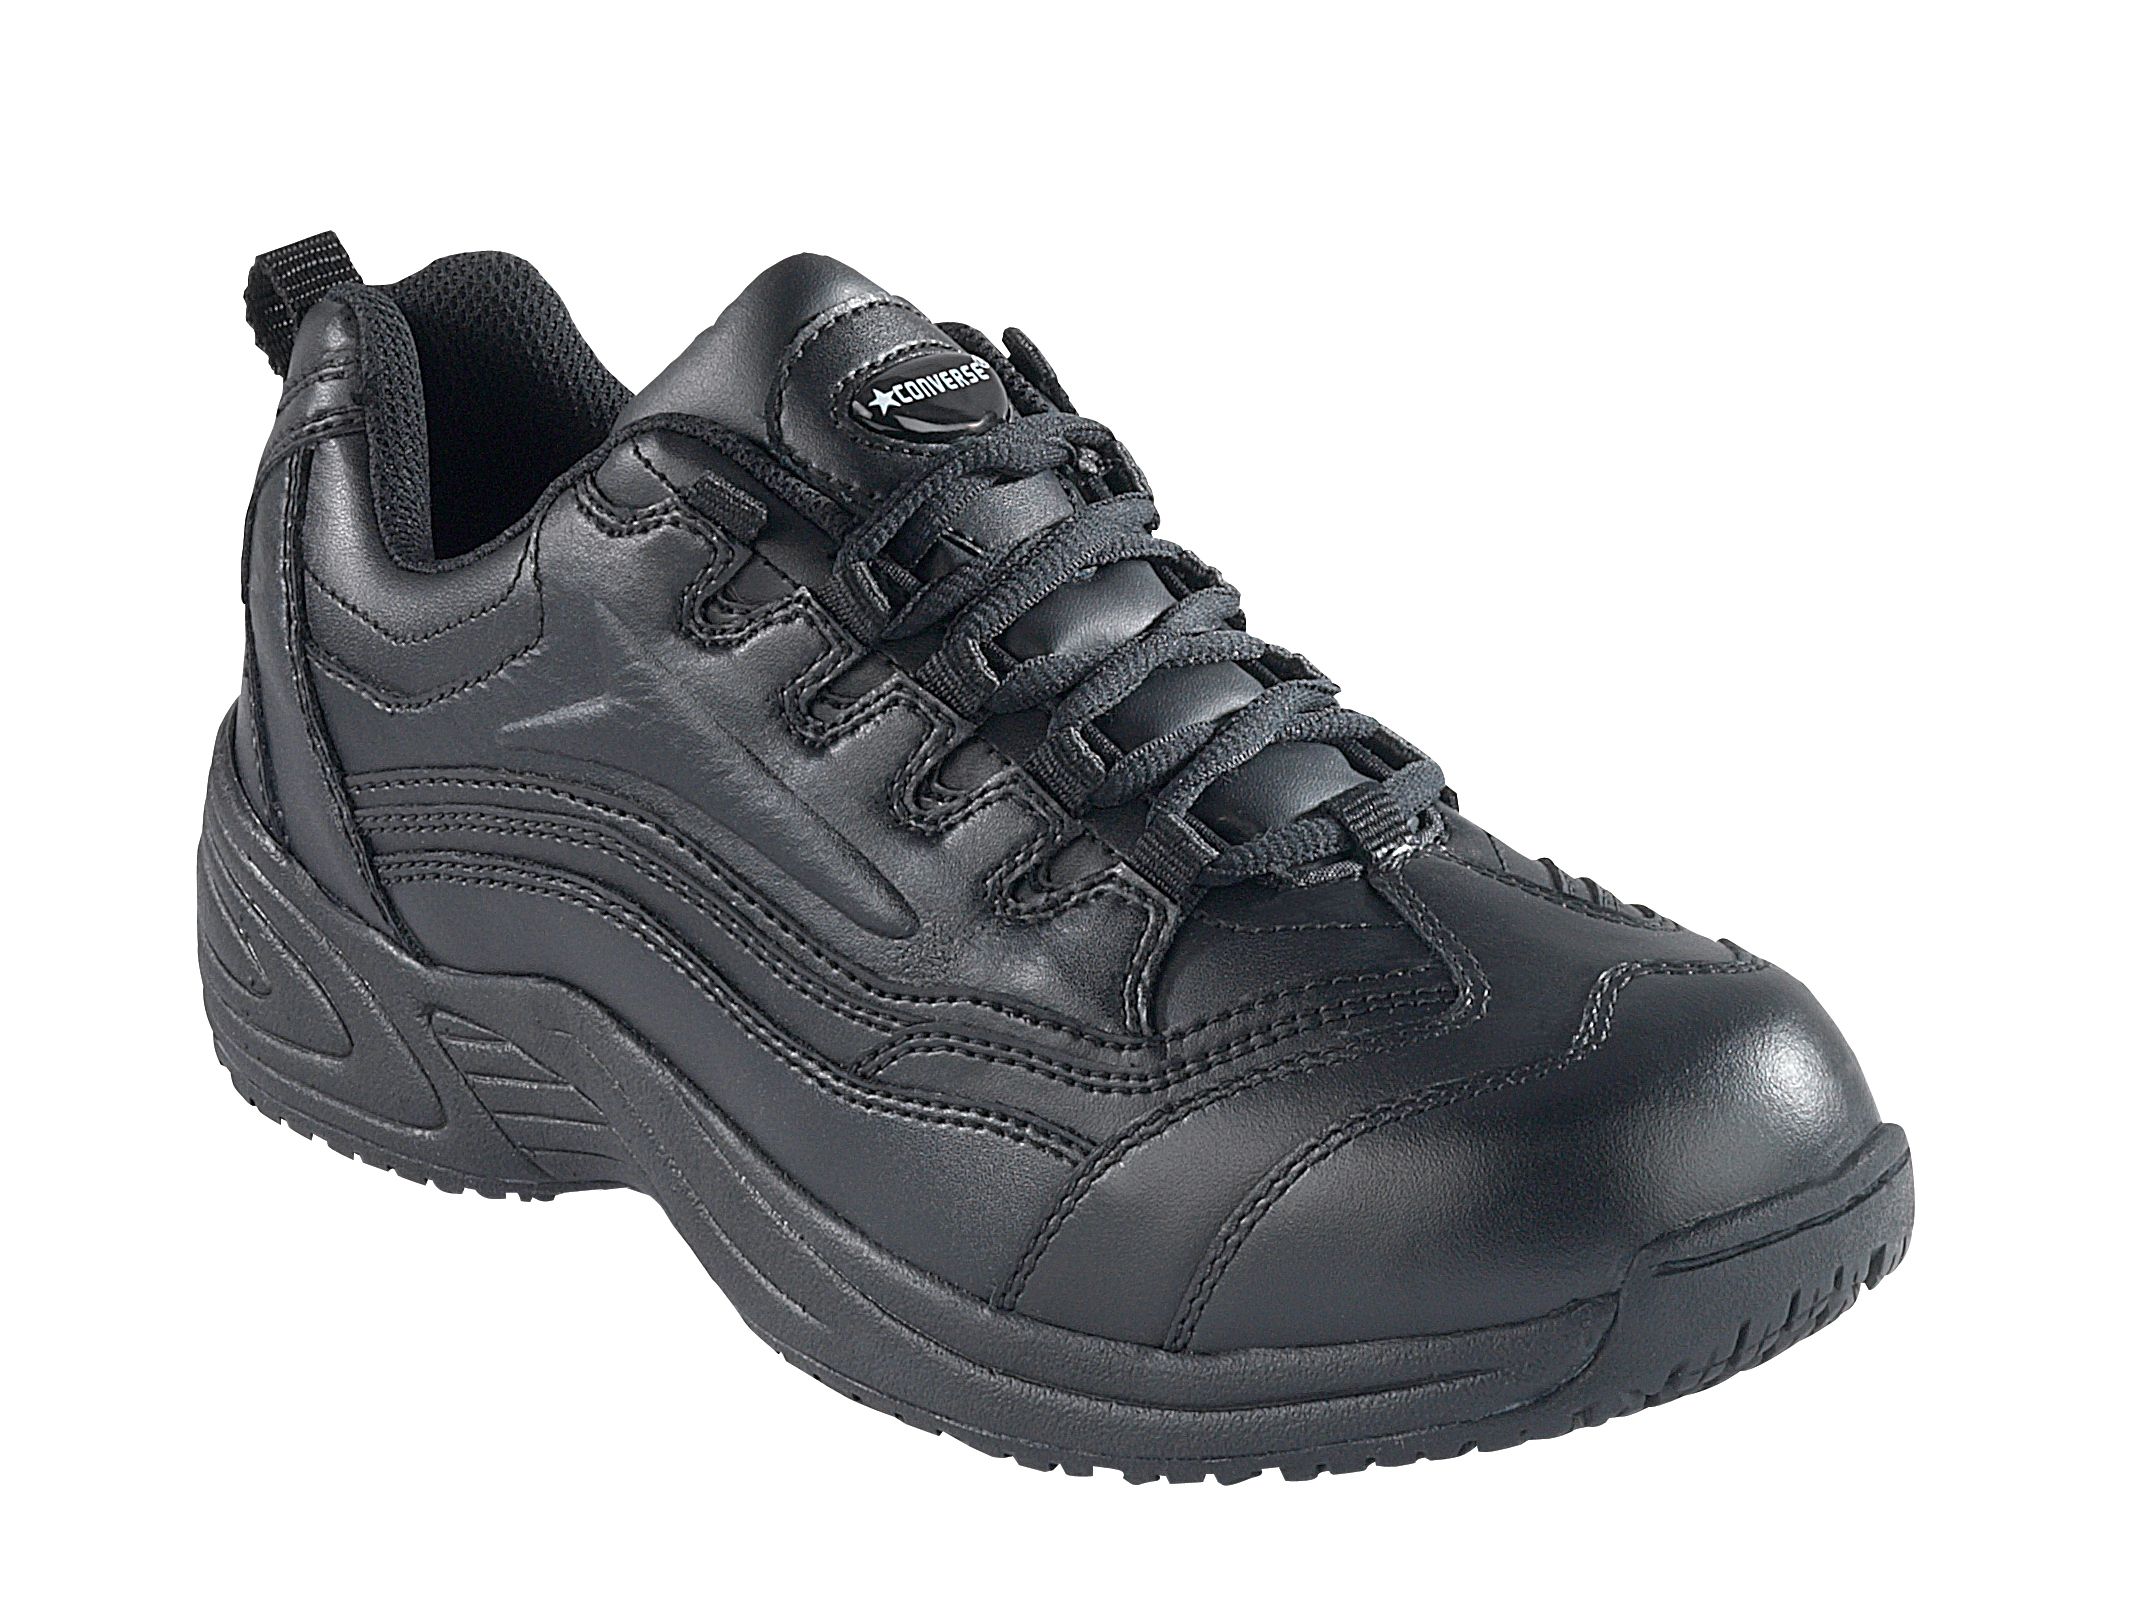 Converse Work Men's Shoes Leather Slip Resistant Black C1100 Wide Avail